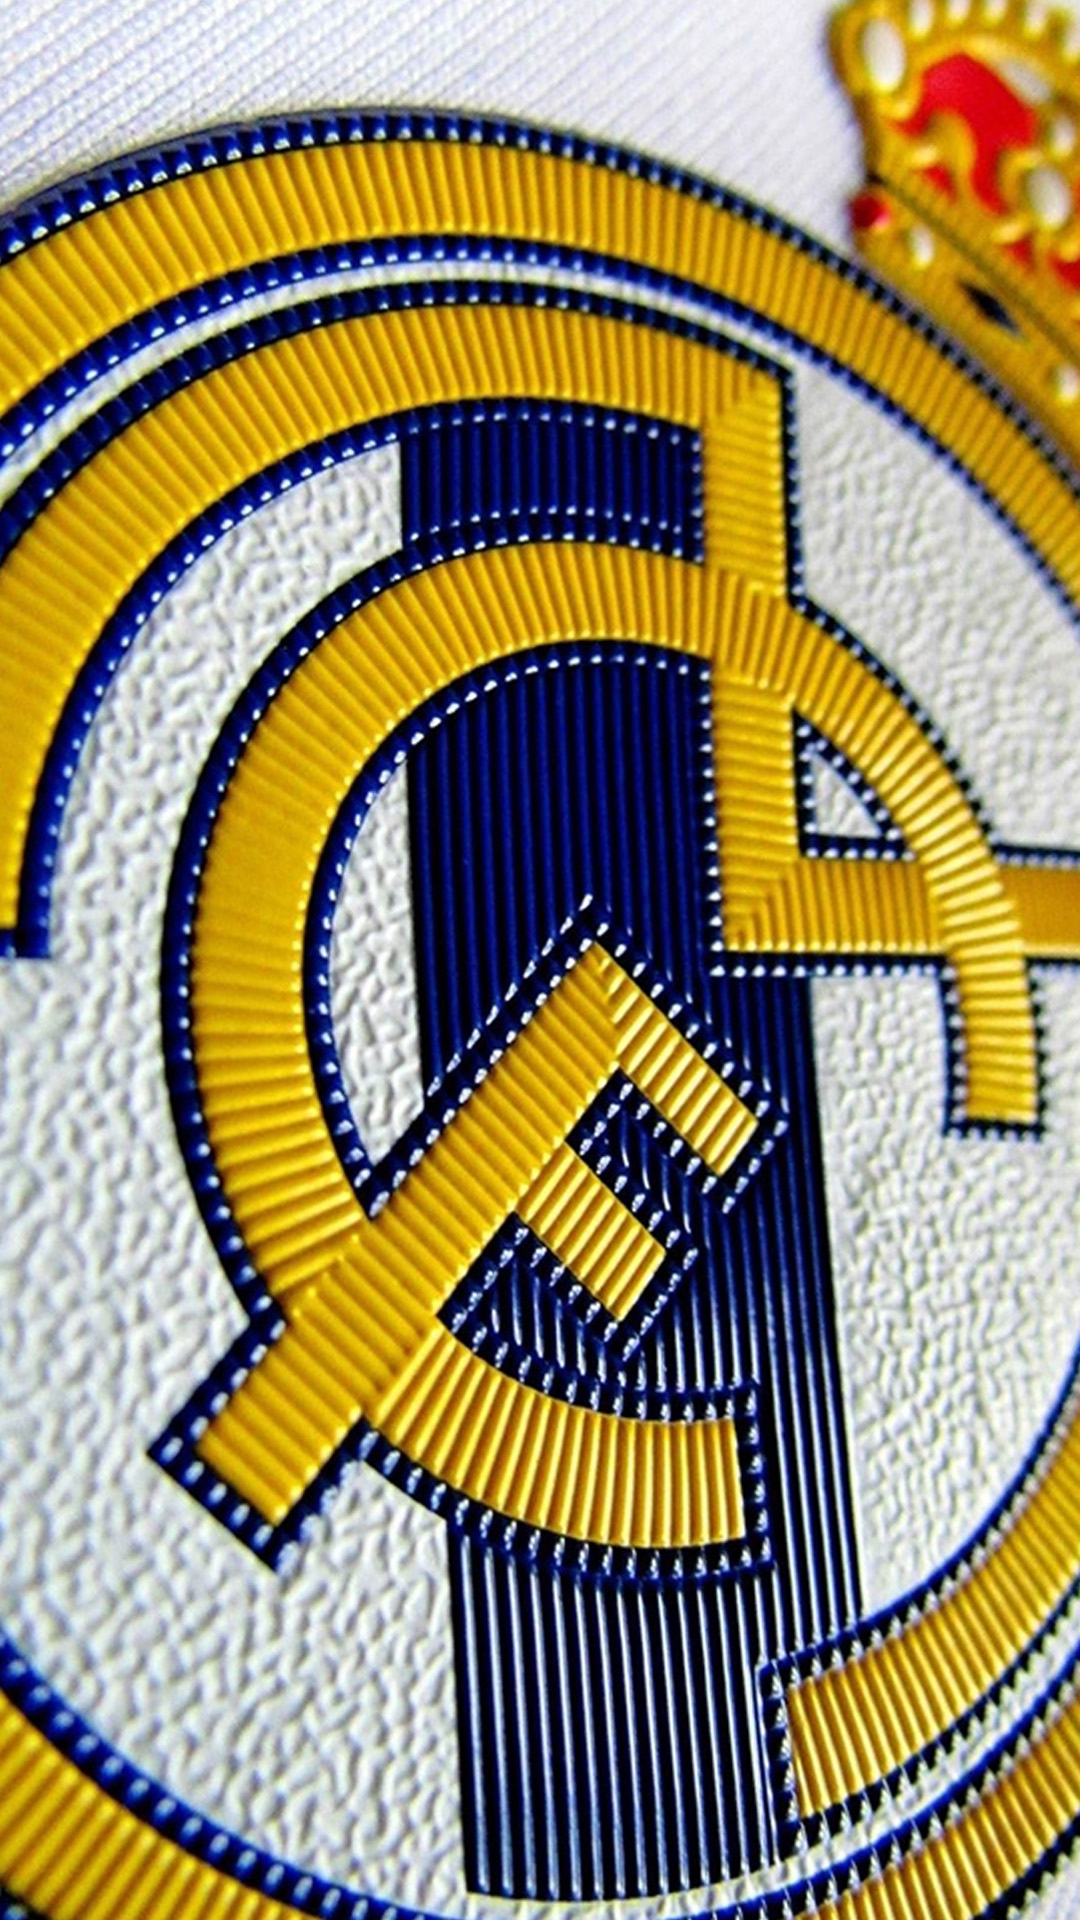 Real Madrid Wallpaper Samsung S5 - اجمل خلفيات ريال مدريد - HD Wallpaper 